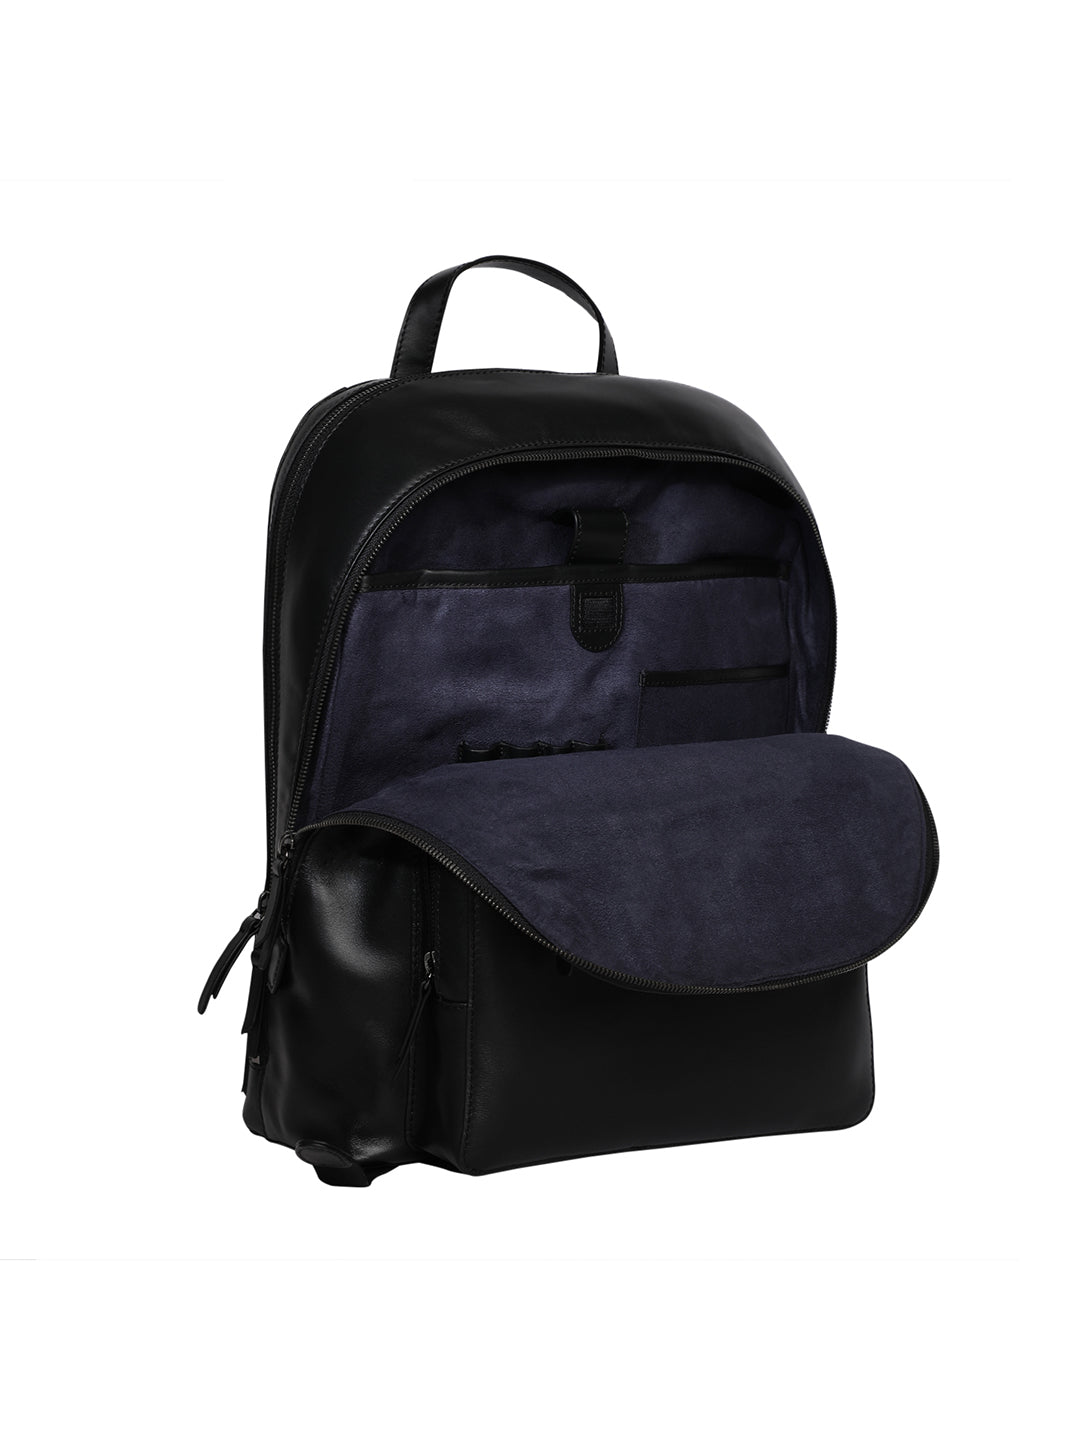 BAGATT Black Leather Backpack